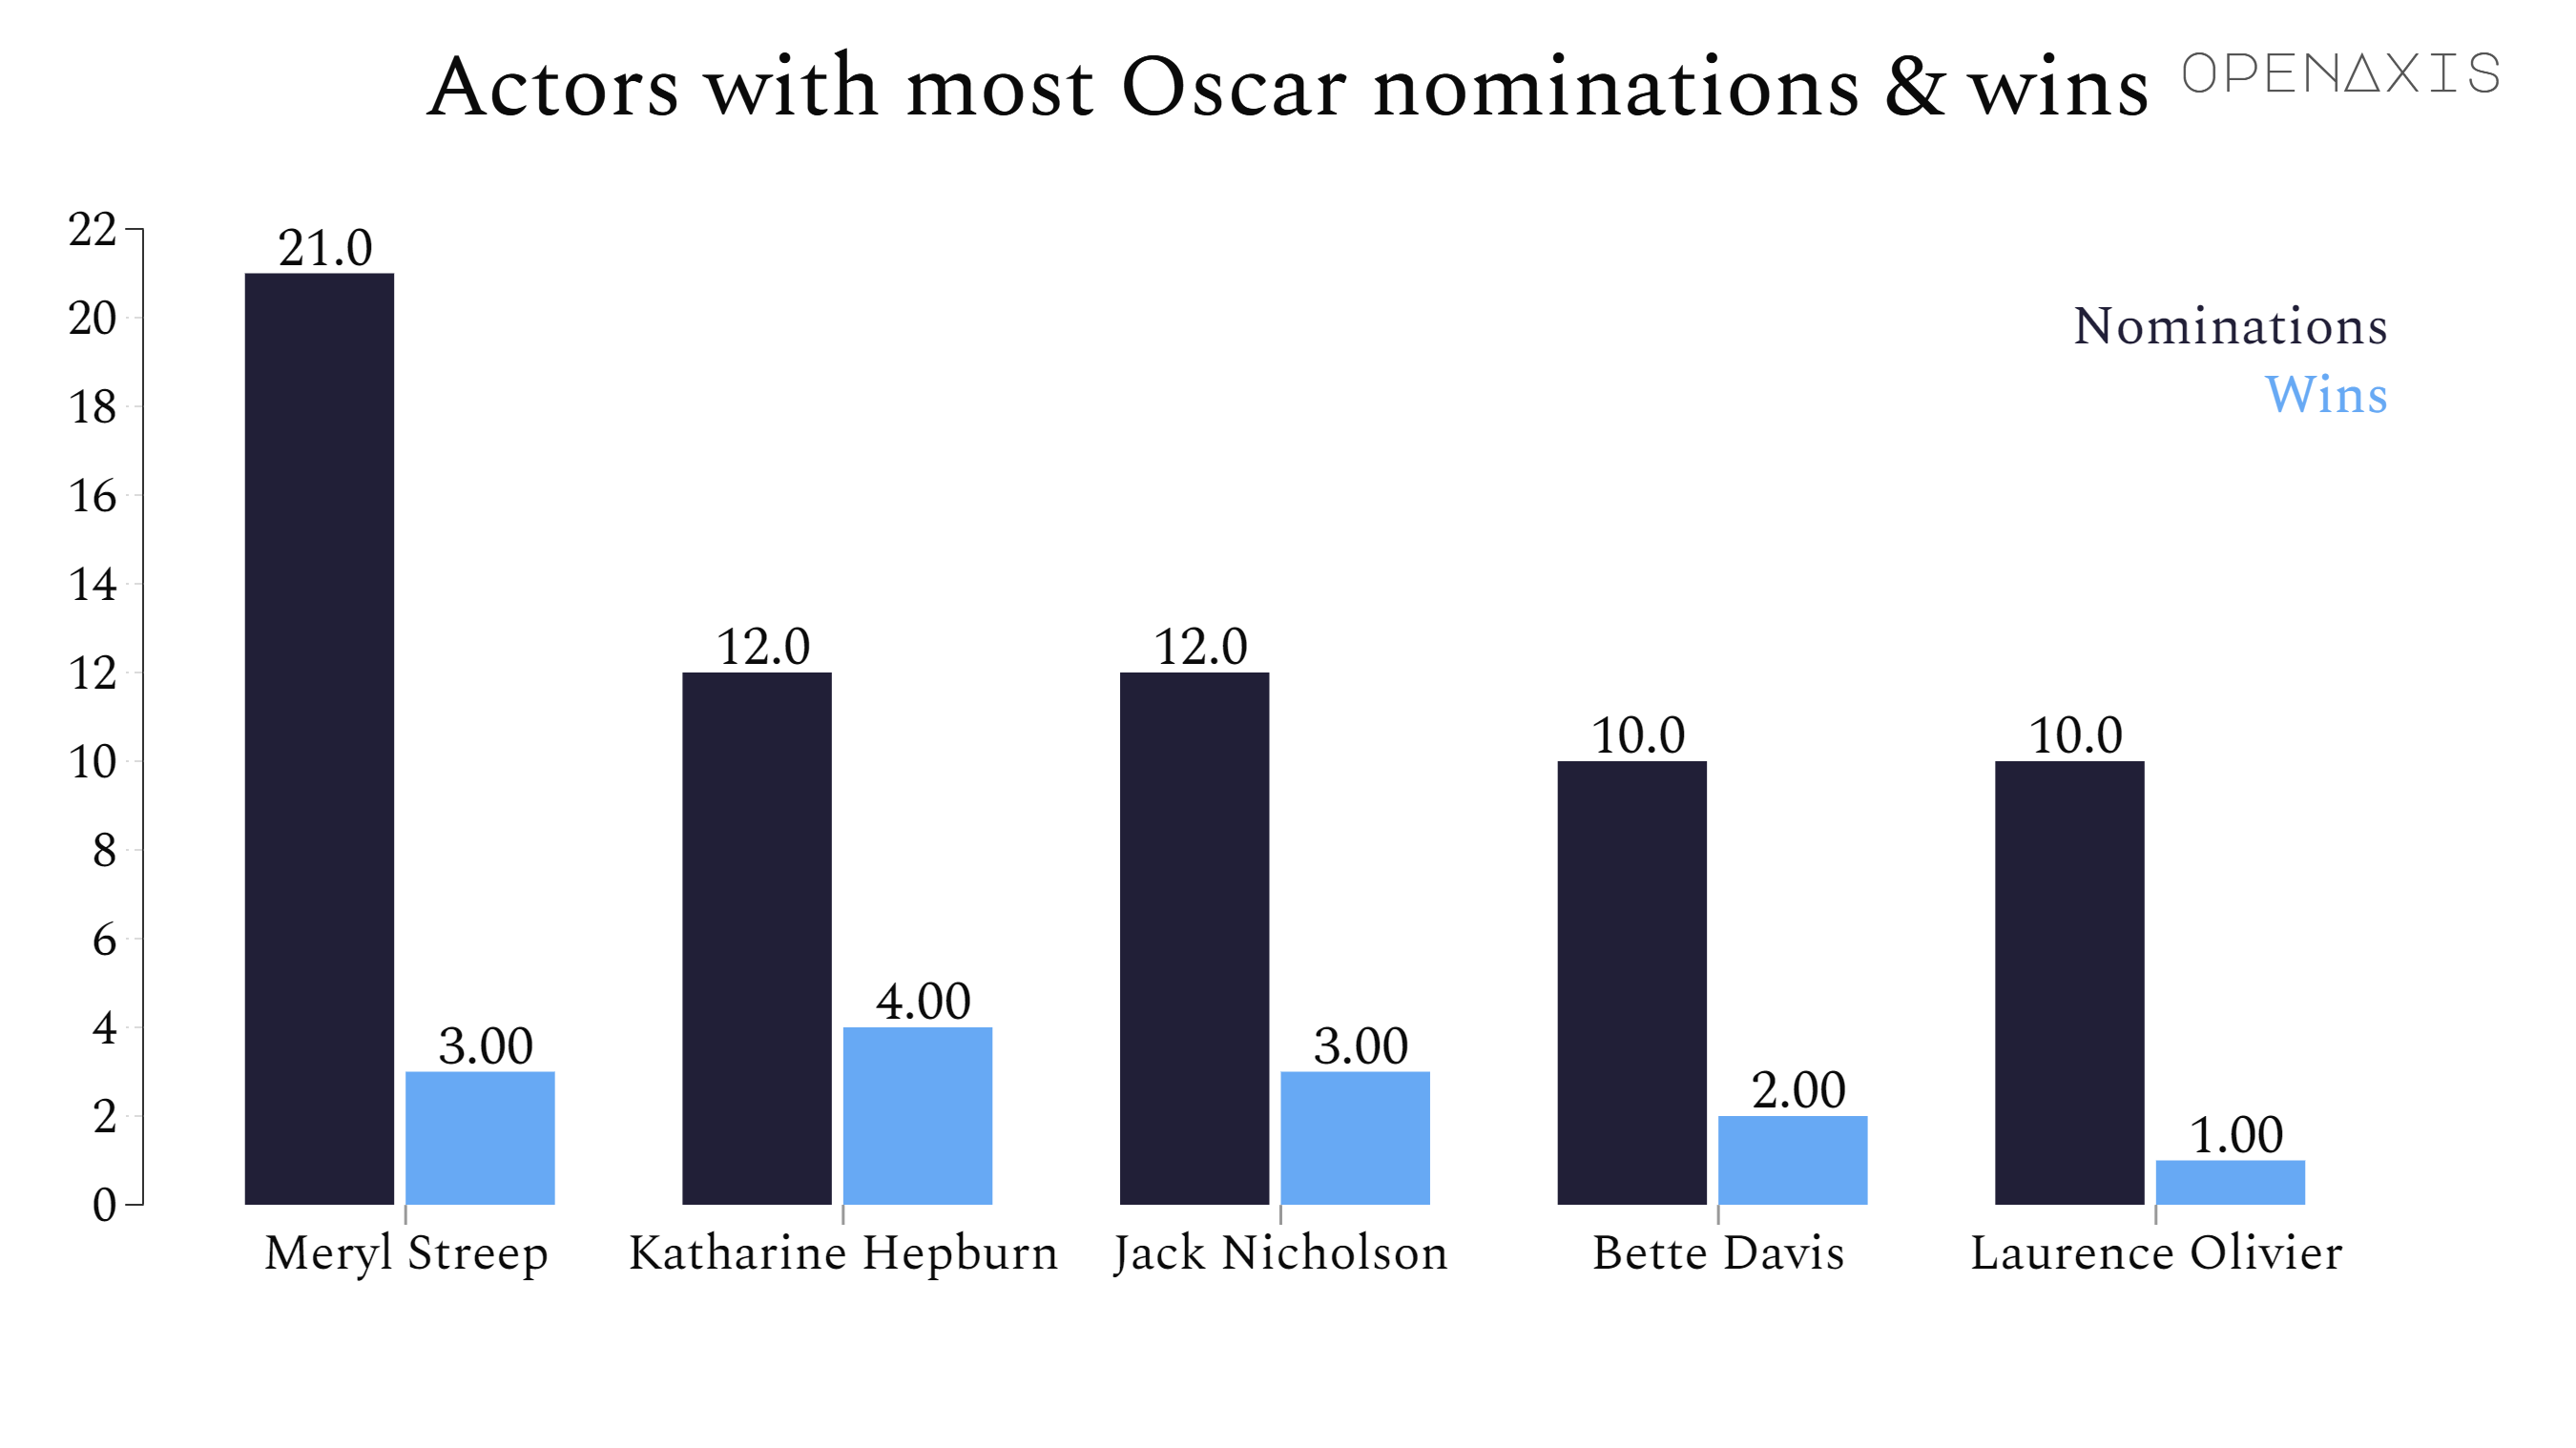 "Actors with most Oscar nominations & wins"